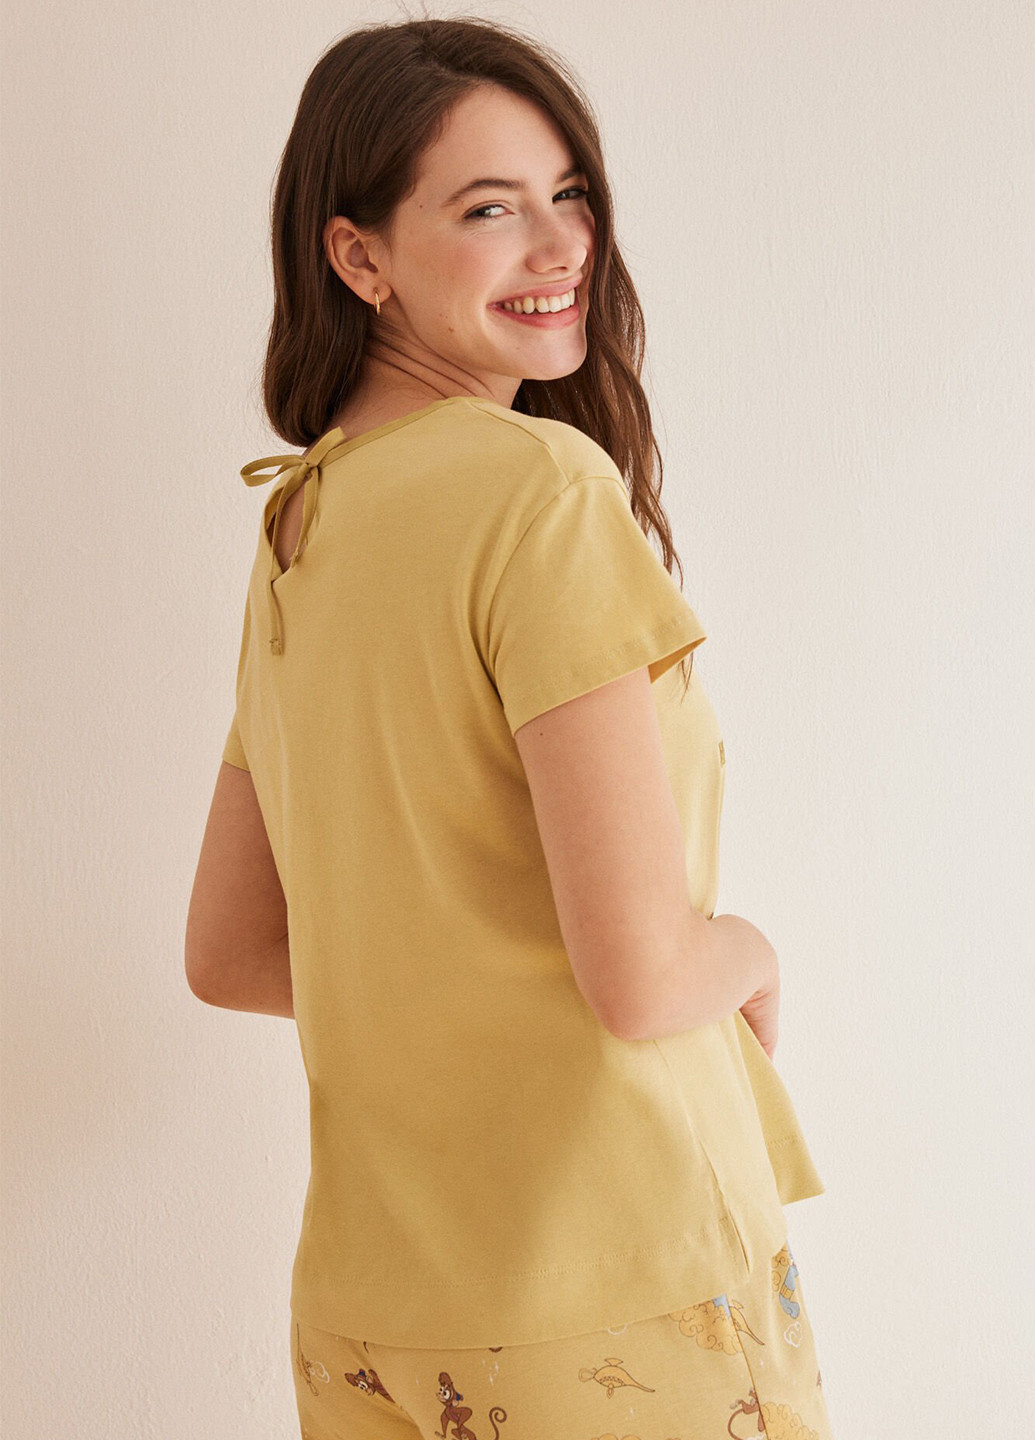 Жовта всесезон піжама (футболка, капрі) футболка + капрі Women'secret